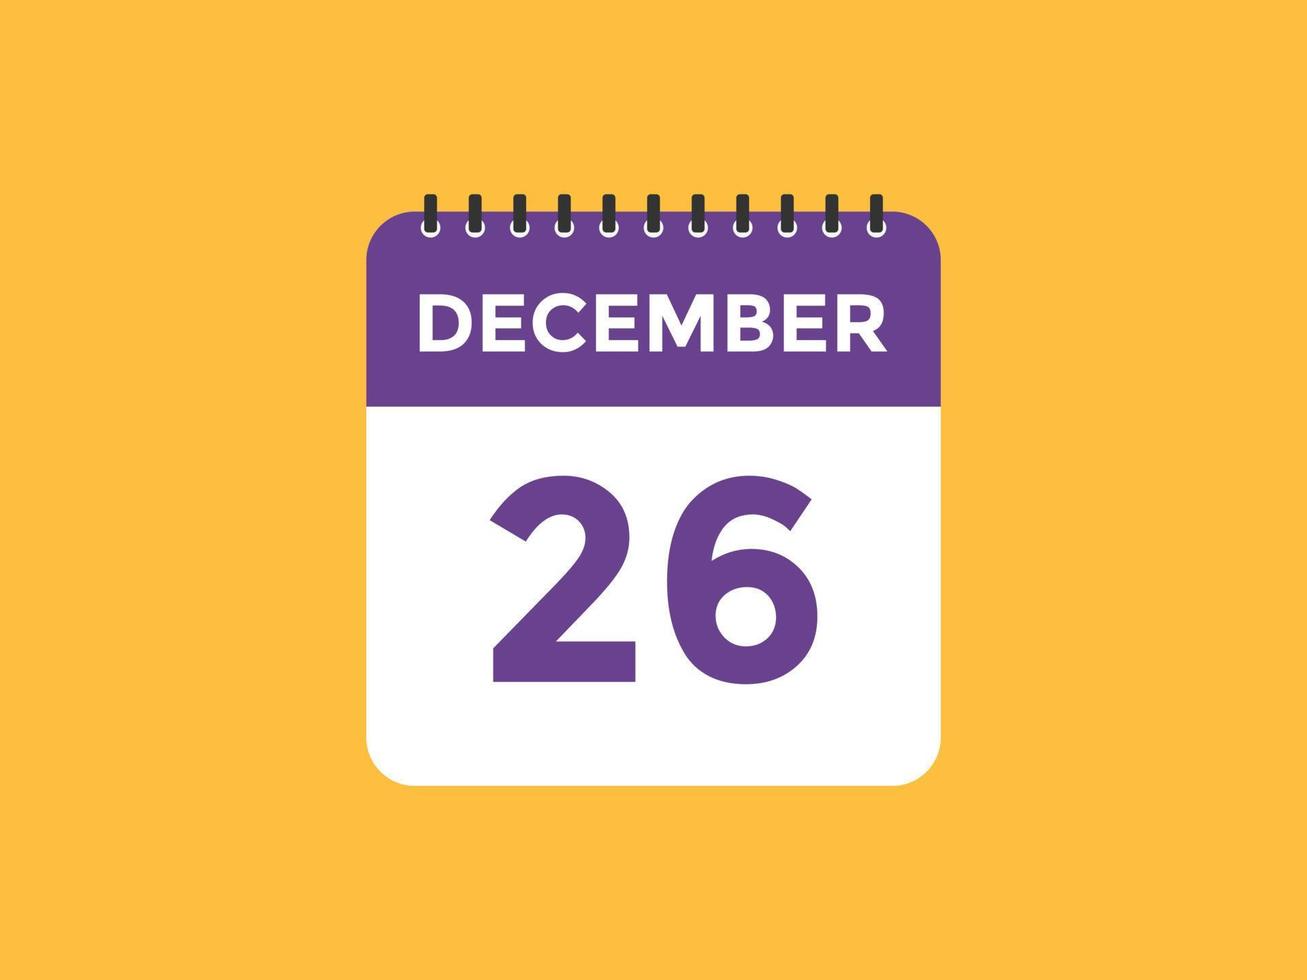 december 26 calendar reminder. 26th december daily calendar icon template. Calendar 26th december icon Design template. Vector illustration